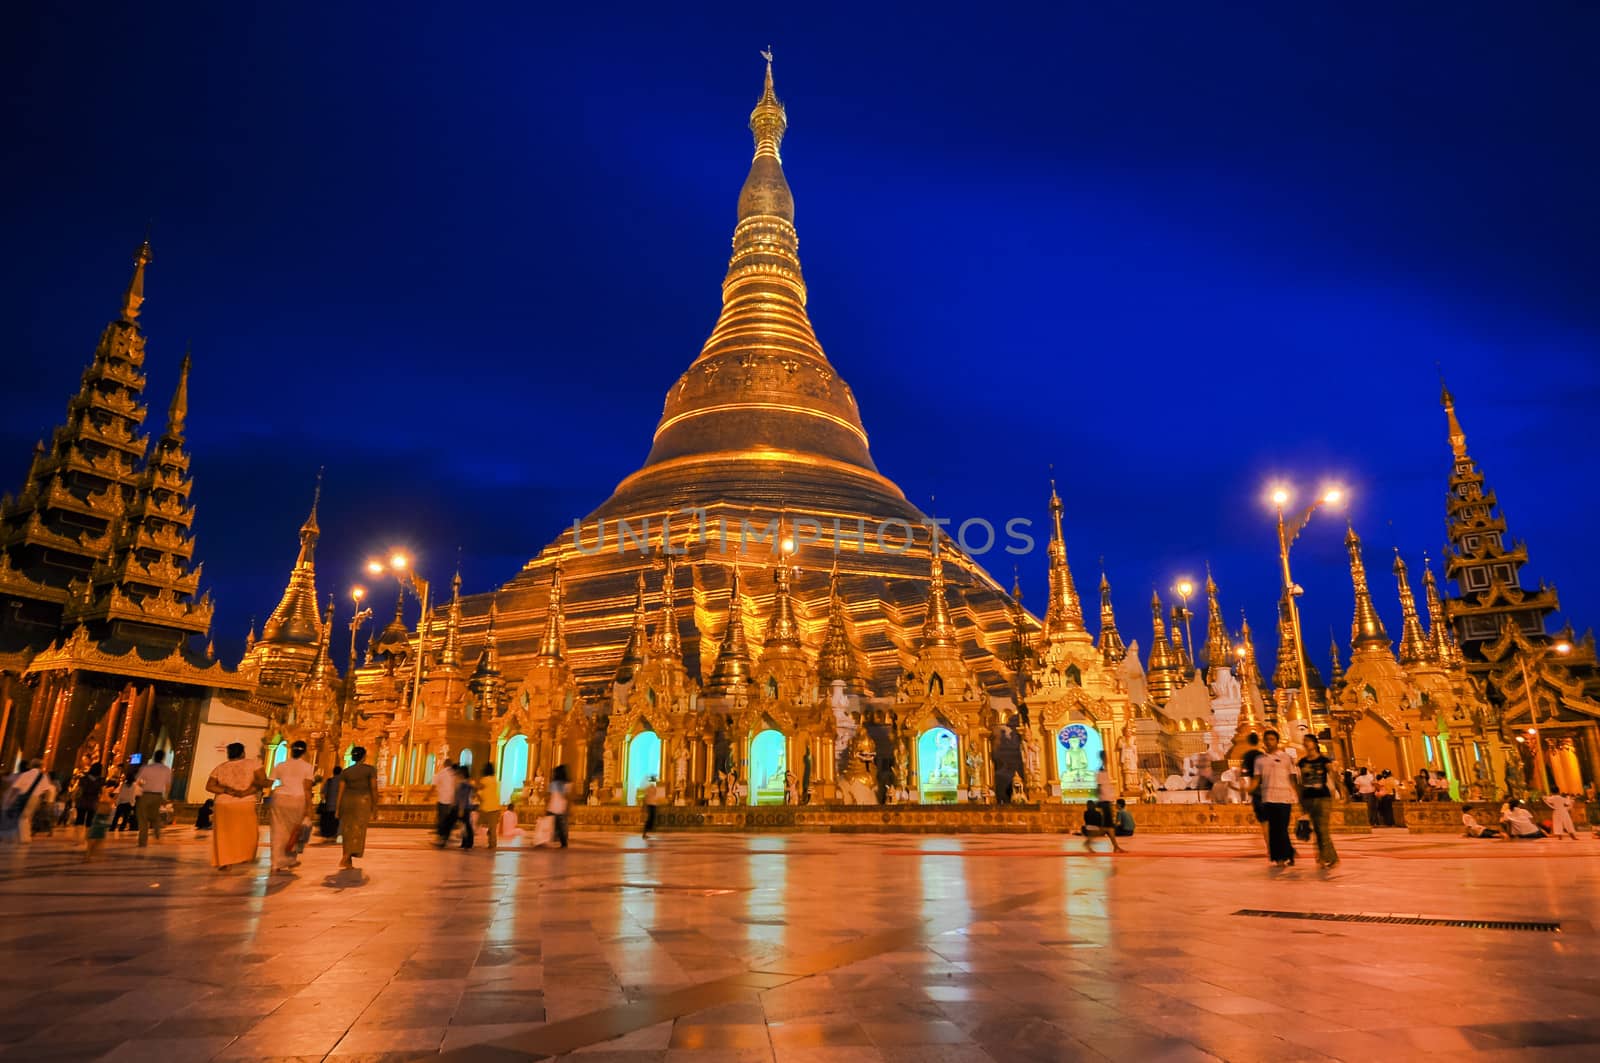 Shwedagon Pagoda in Yangon City Night, Burma (Myanmar) by weltreisendertj